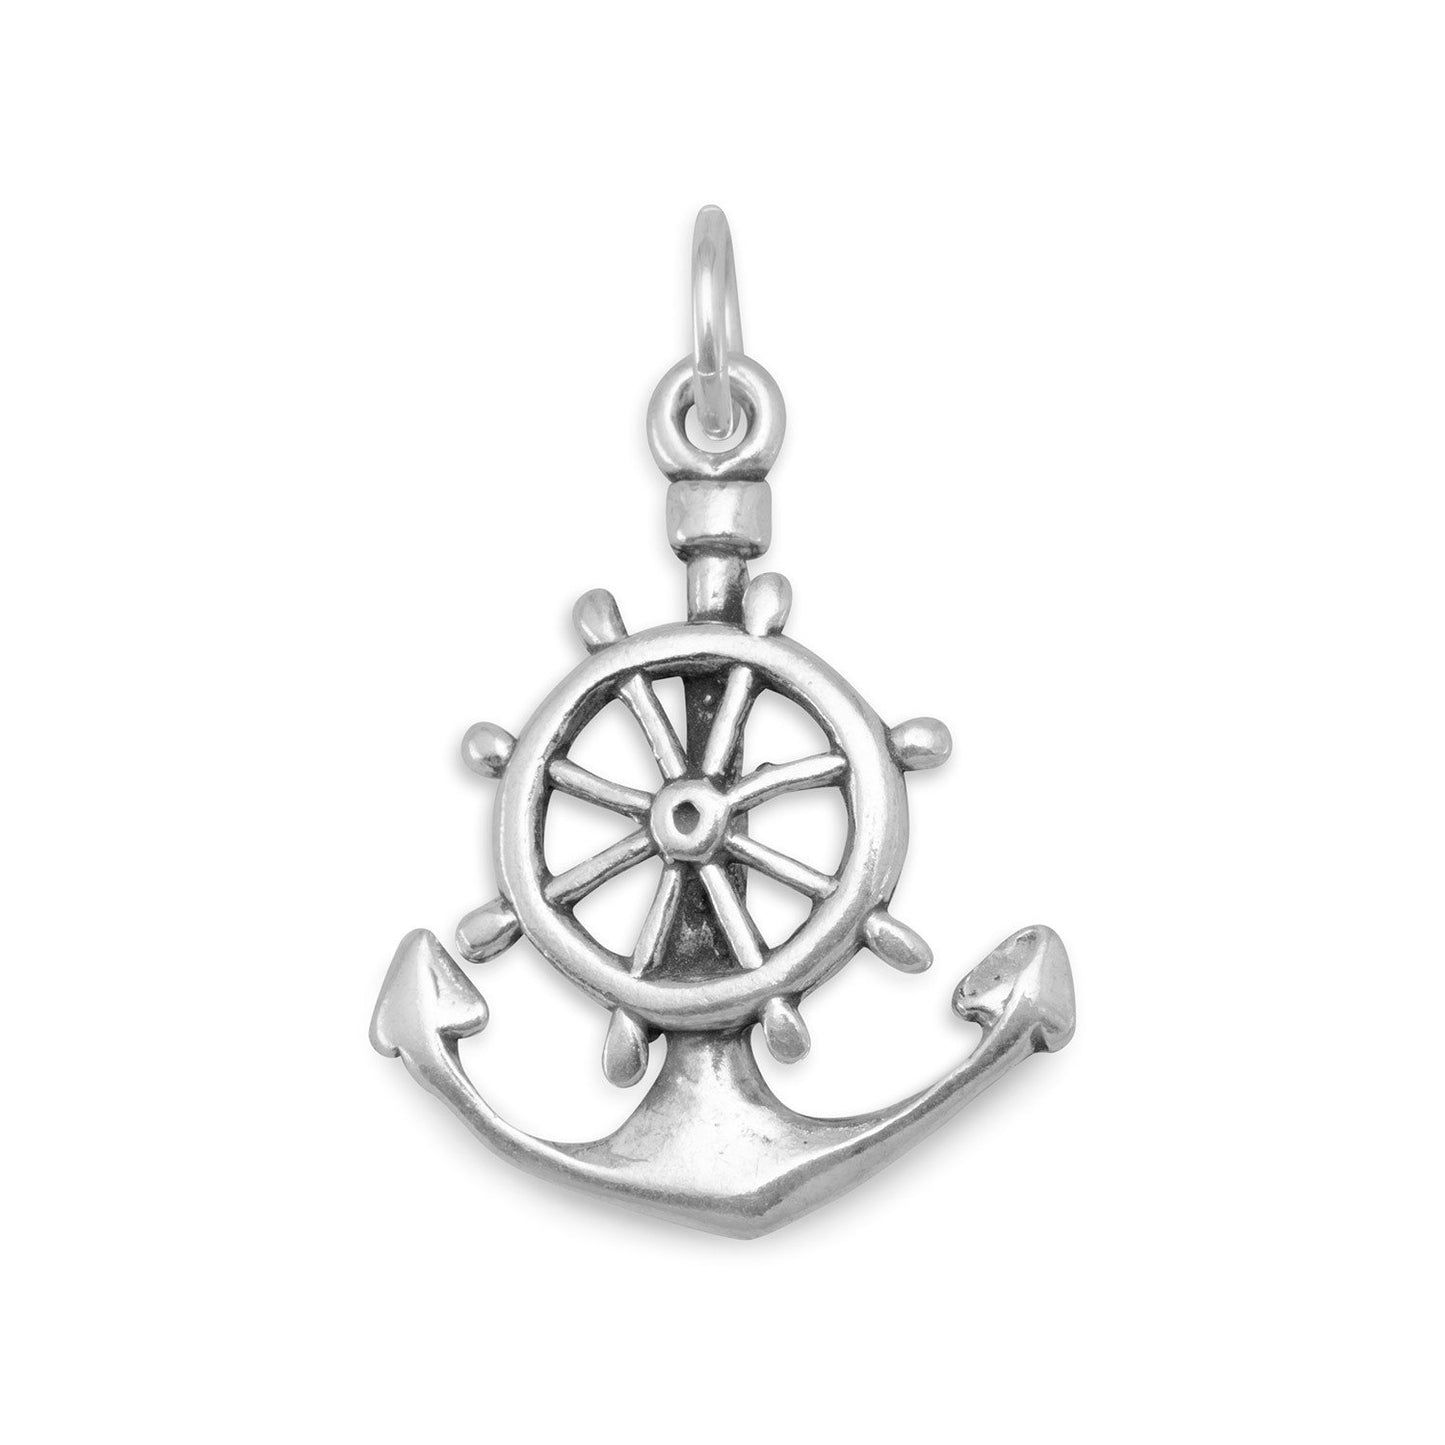 Oxidized Anchor Mariners Cross Charm